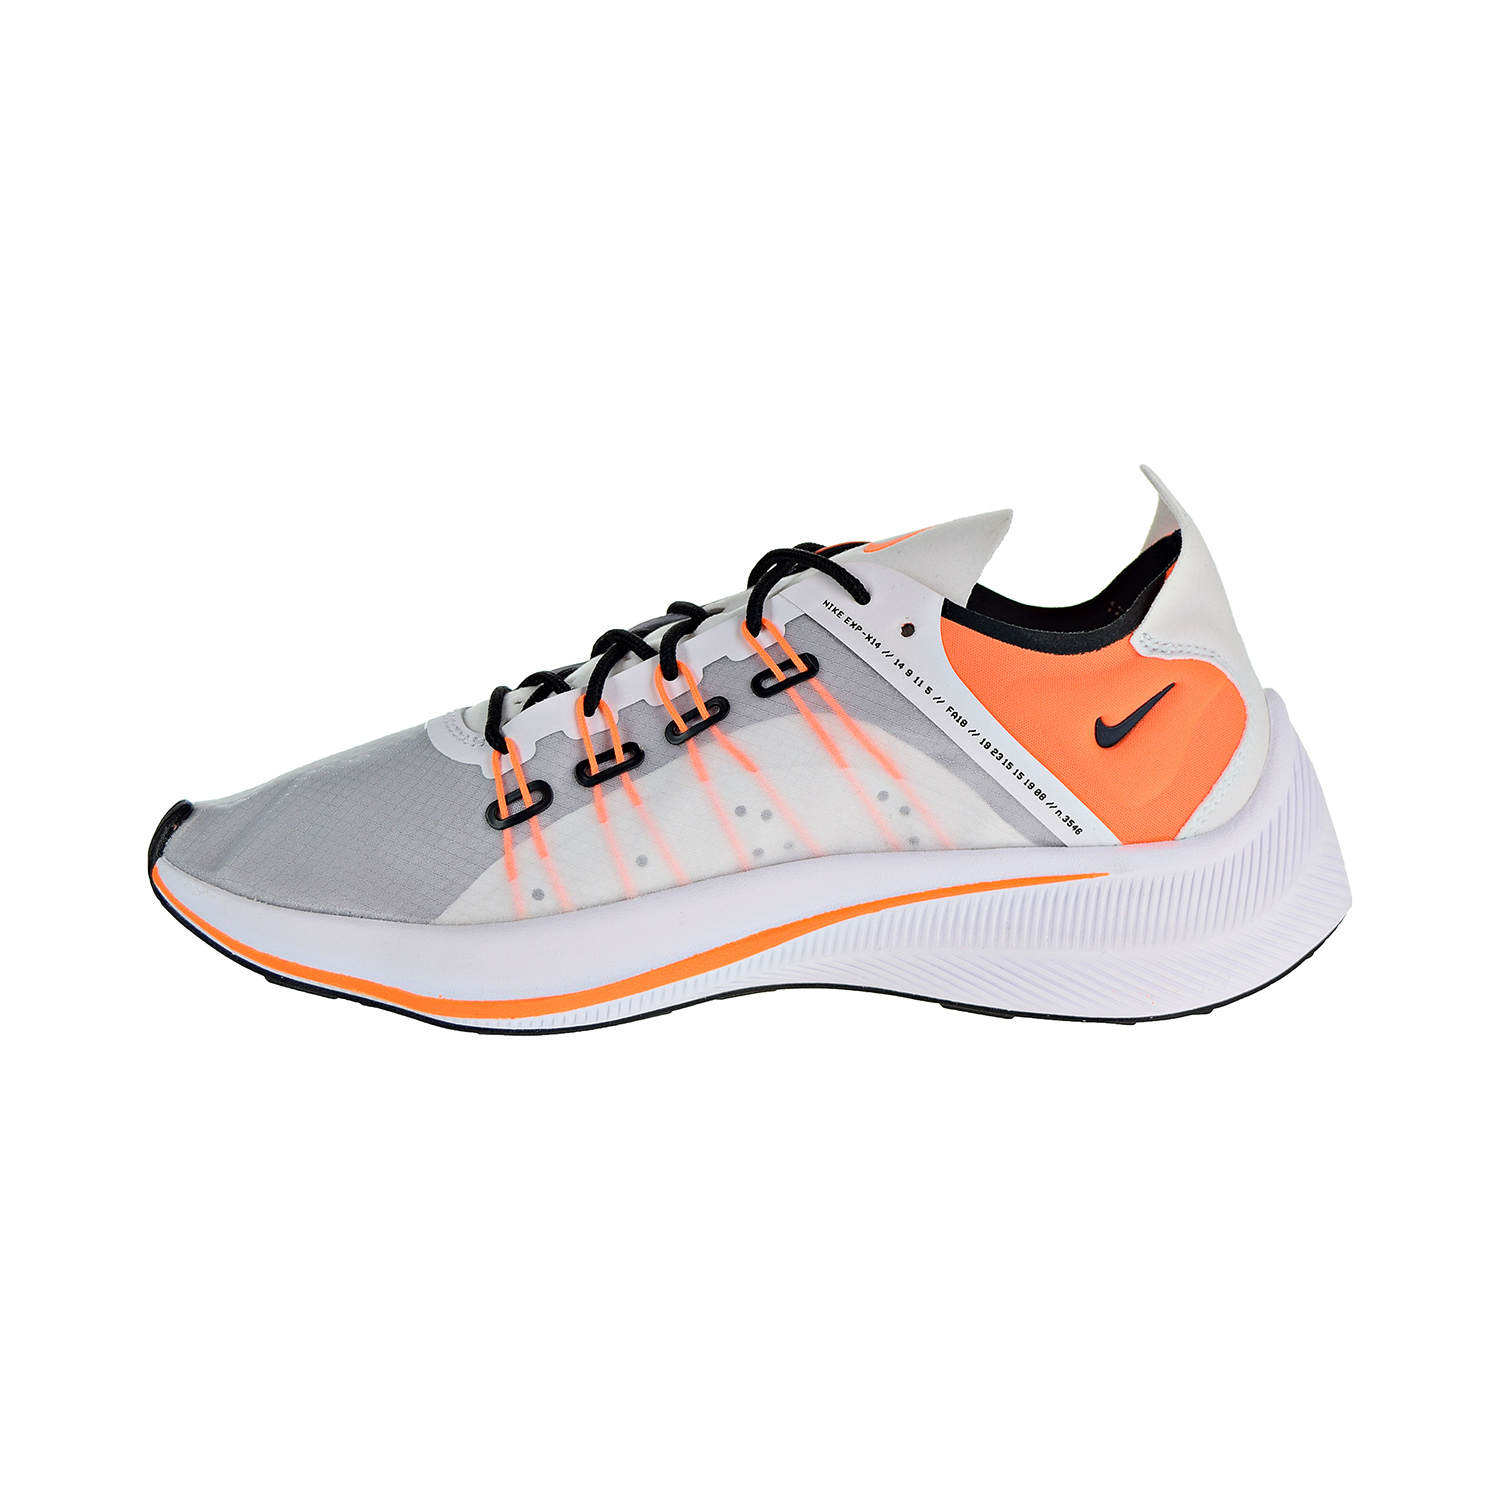 Nike EXP-X14 SE "Just Do It" Men's Shoes White/Total Orange/Black Wolf ao3095-100 - image 4 of 6